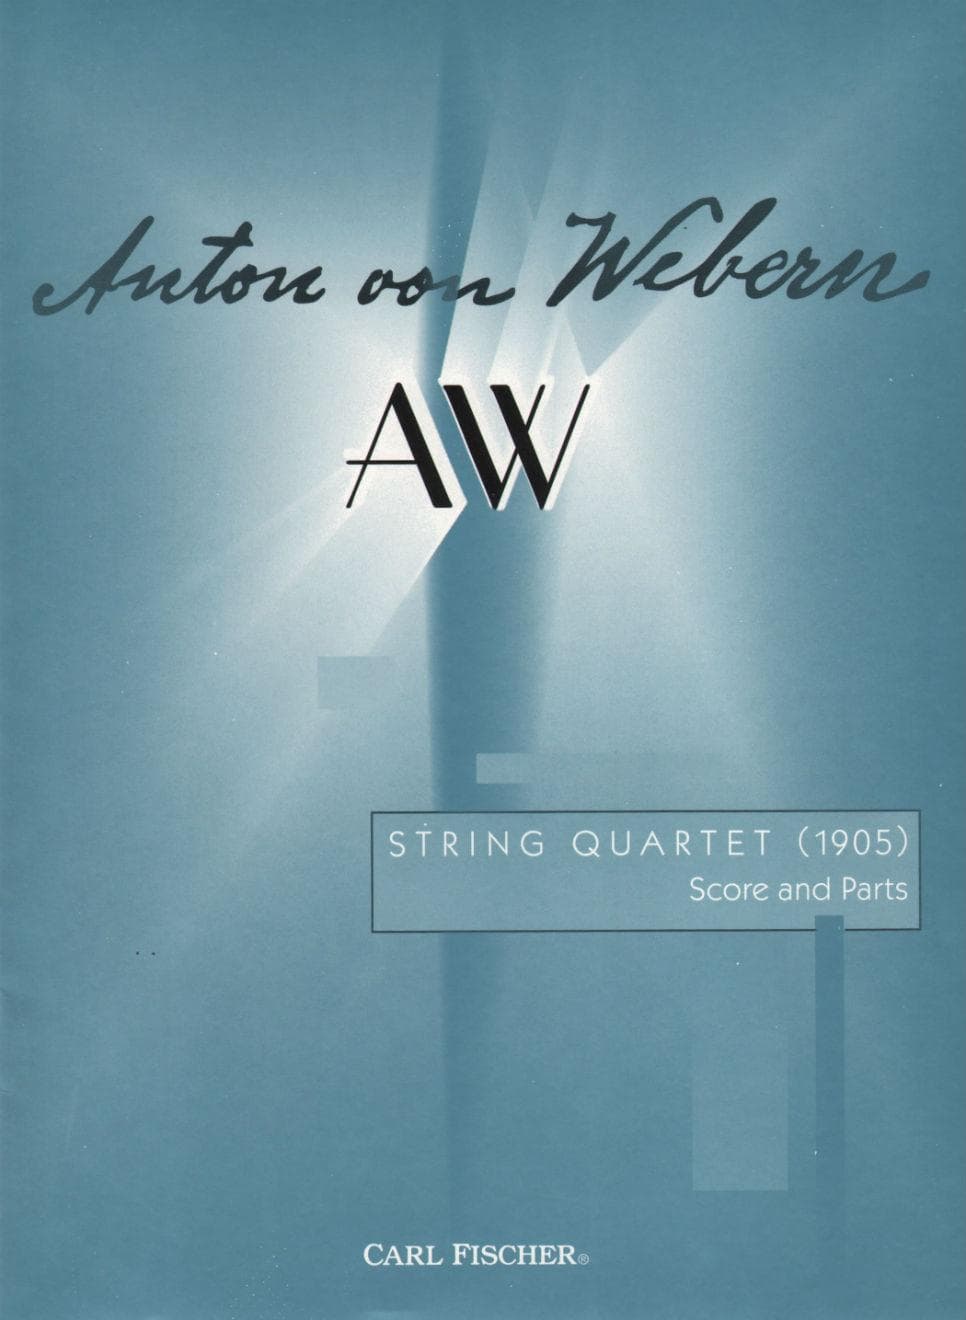 Webern - String Quartet (1905) Published by Carl Fischer